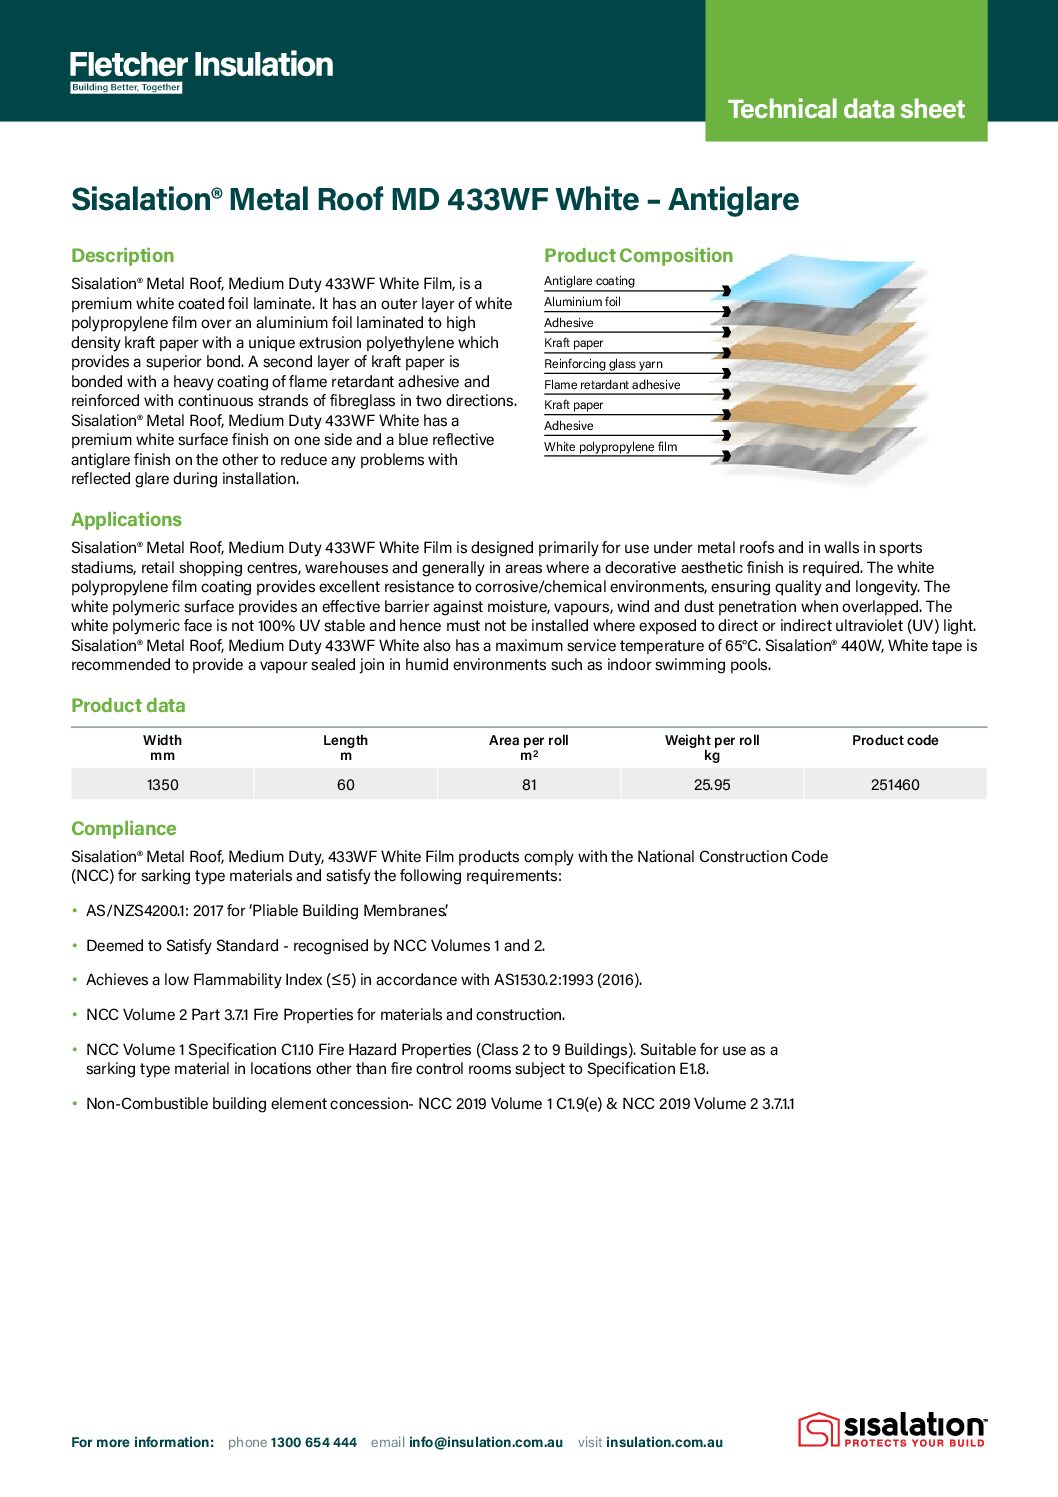 Sisalation® Metal Roof MD 433WF White-Antiglare – Technical Data Sheet